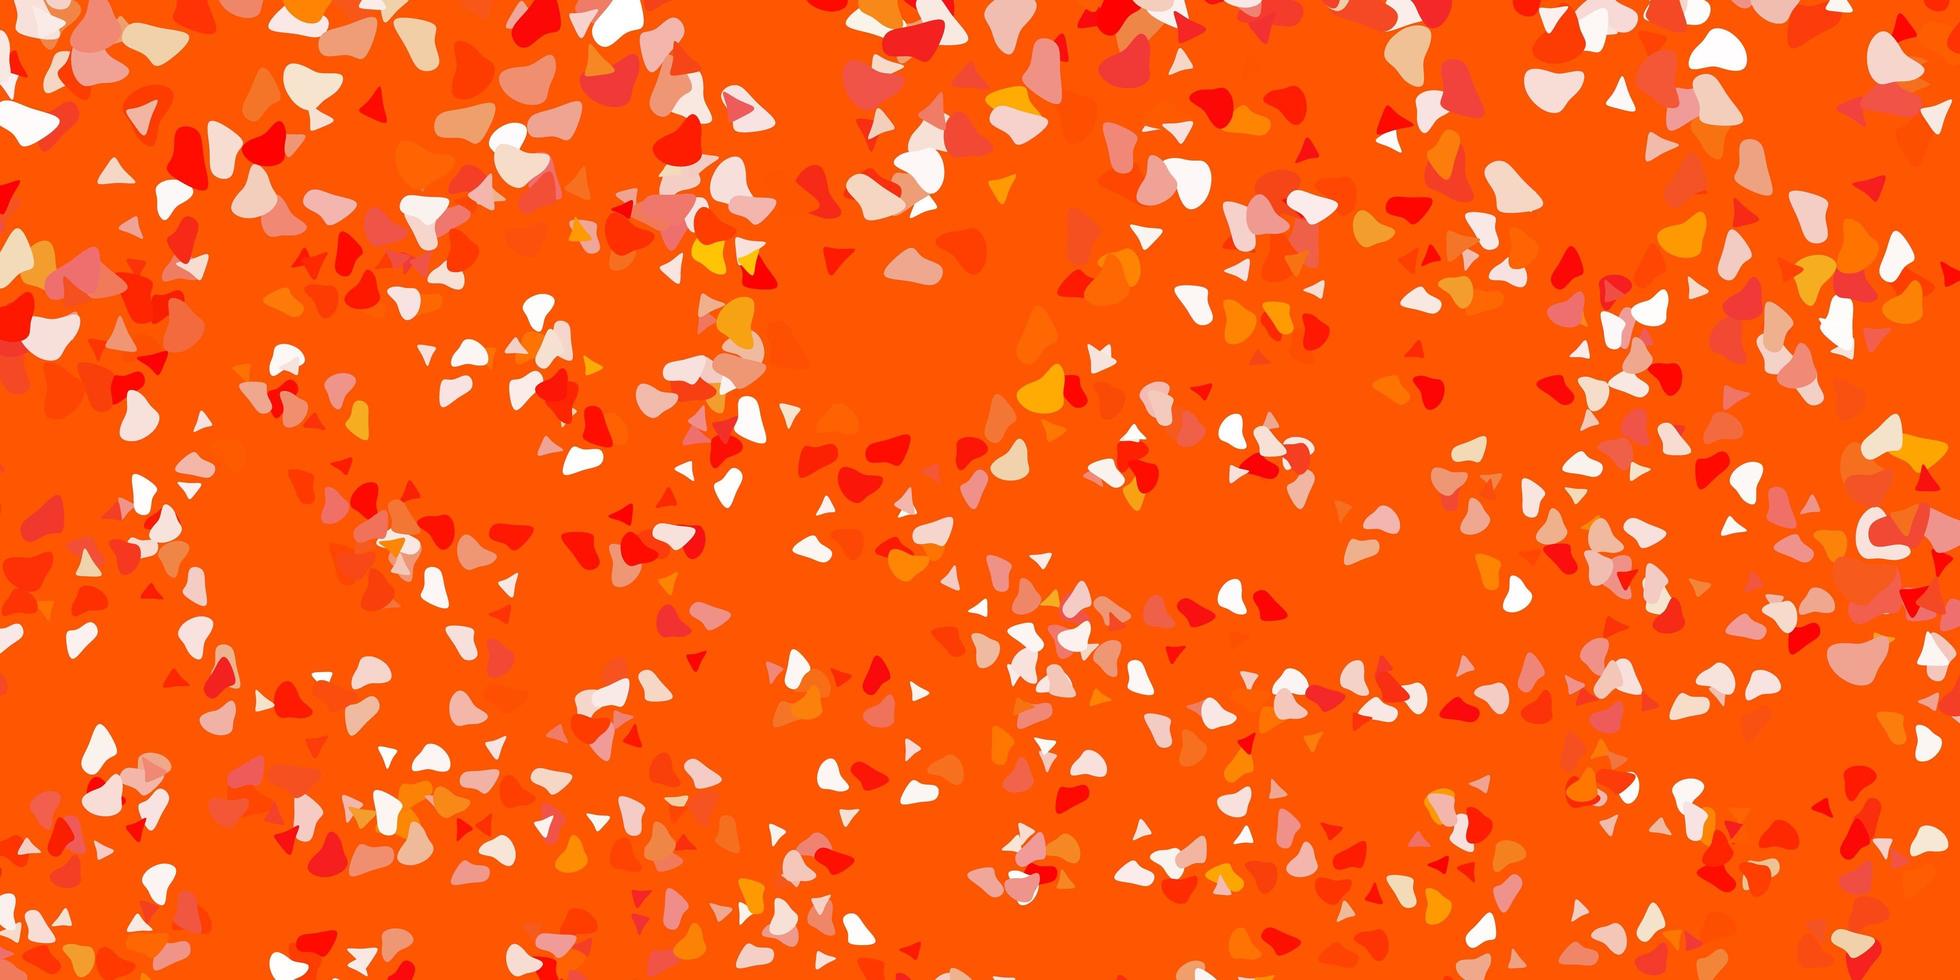 ljus orange vektor bakgrund med kaotiska former.